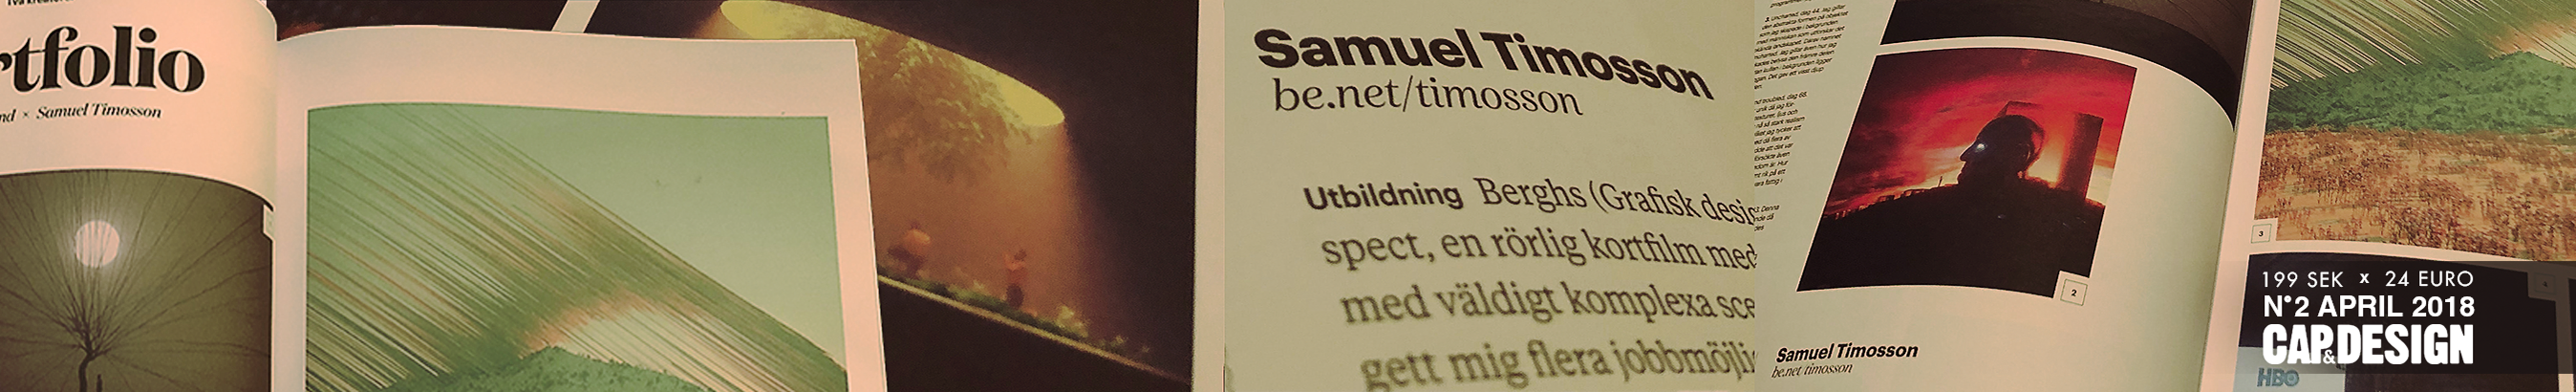 Samuel Timosson のプロファイルバナー